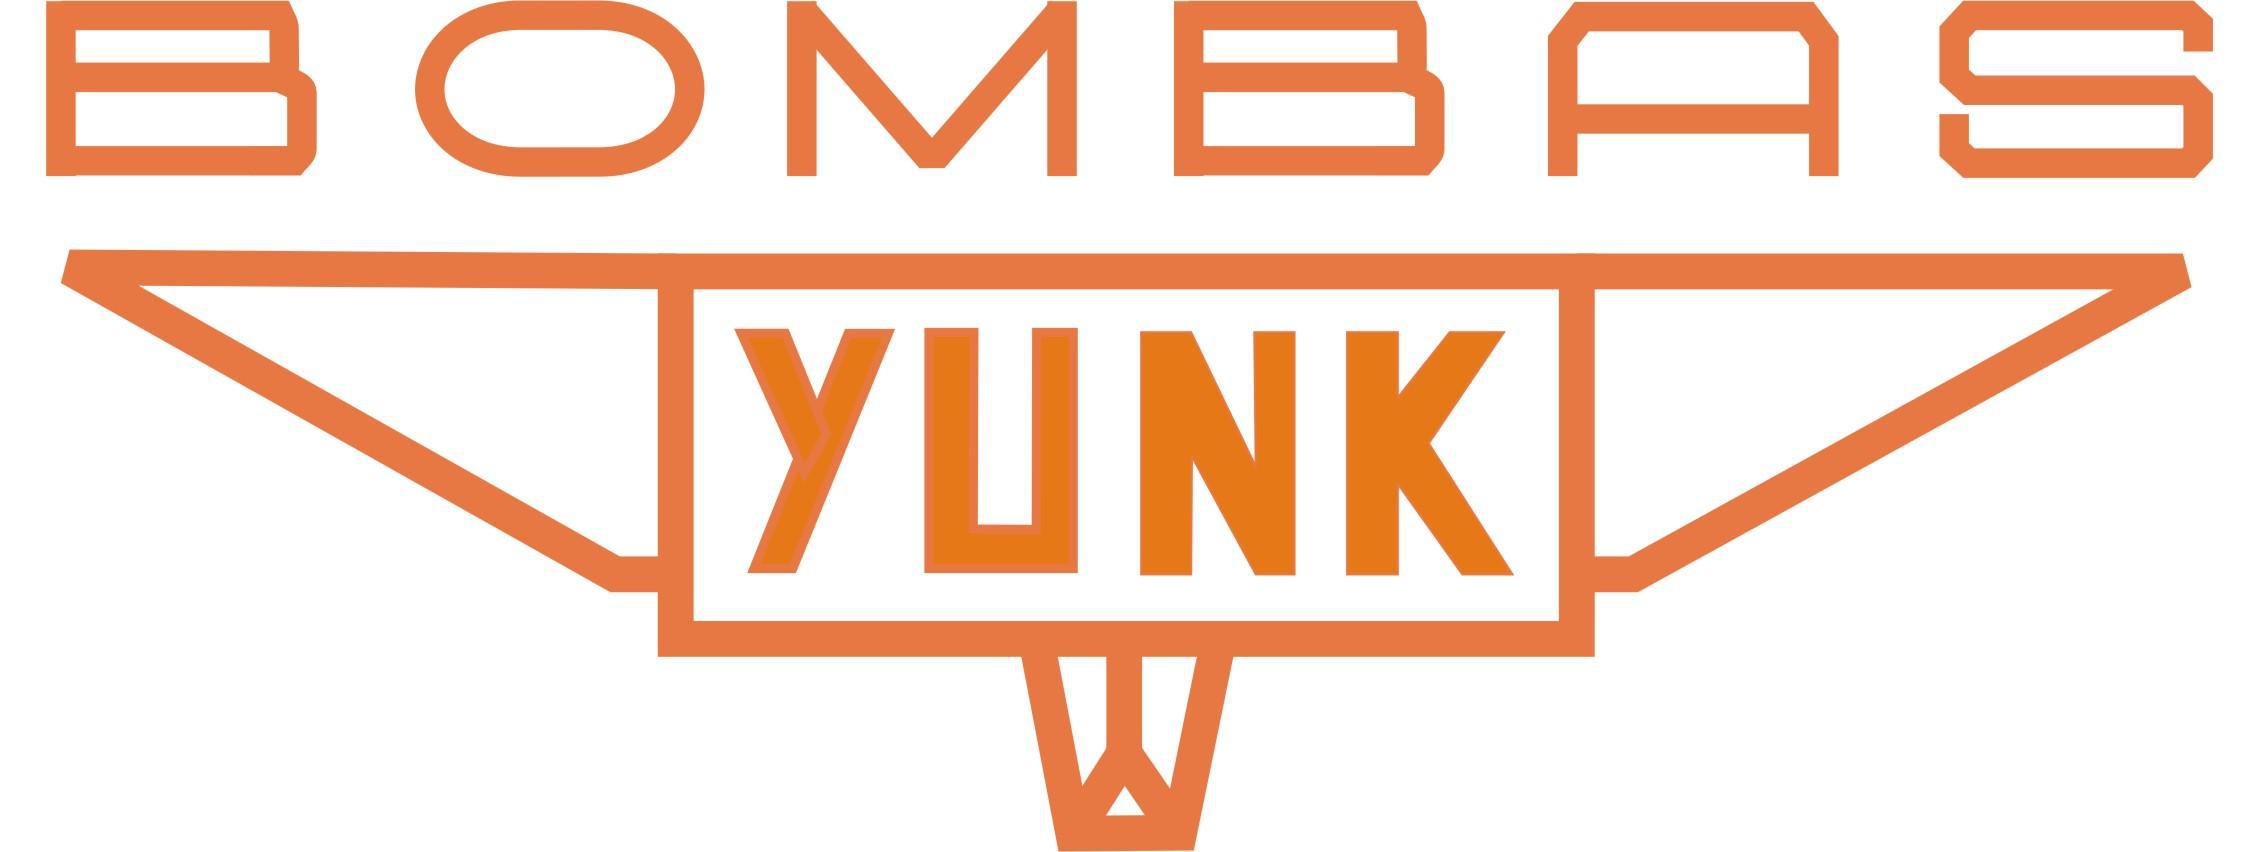 Bombas Yunk Logo